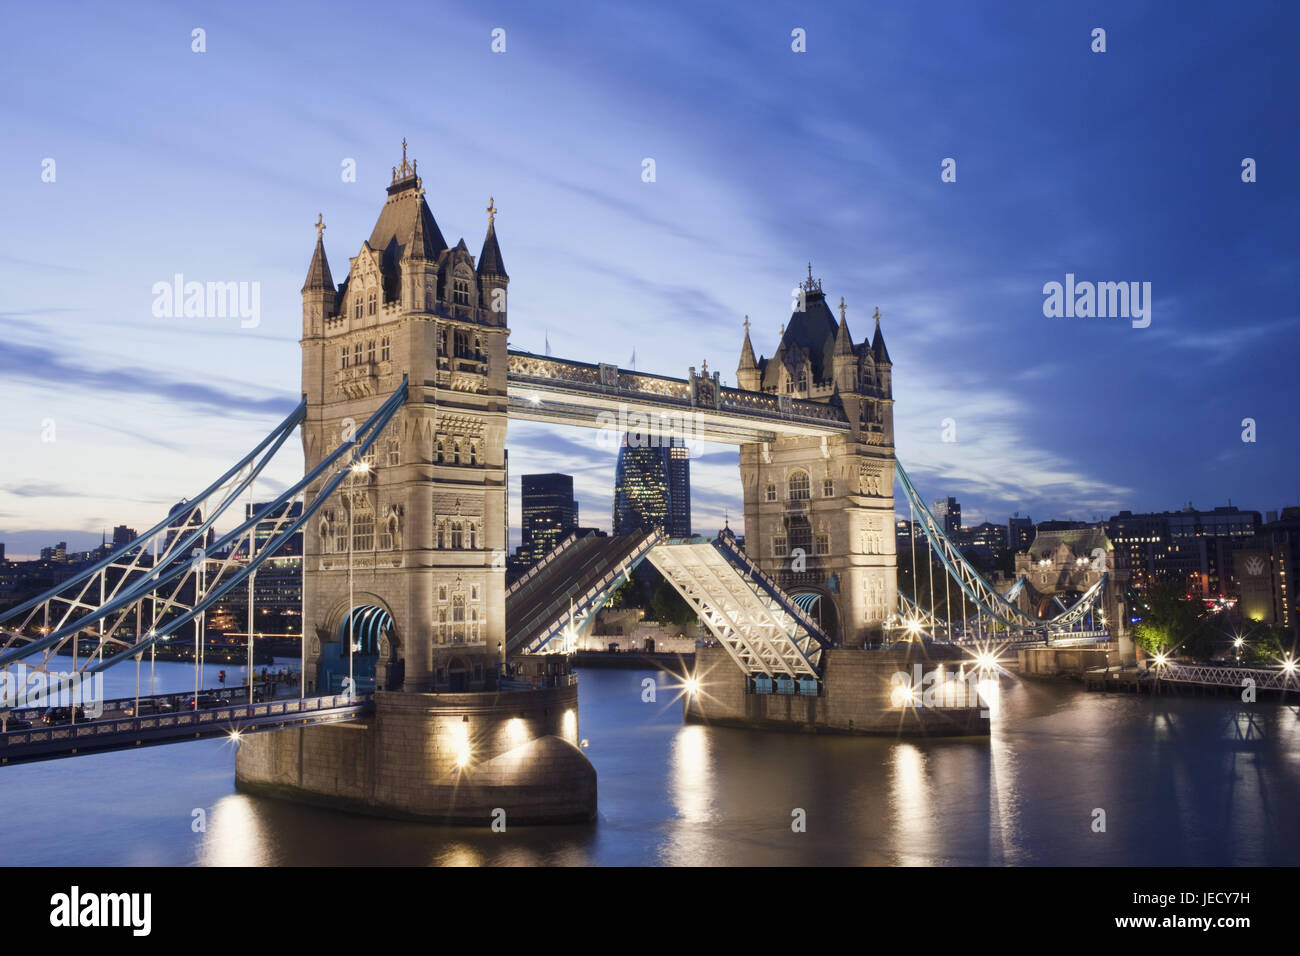 England, London, Tower Bridge, opened, the Thames, dusk, town, architecture, structure, landmark, monument, bridge, river, illuminateds, openly, balance bridge, Stock Photo